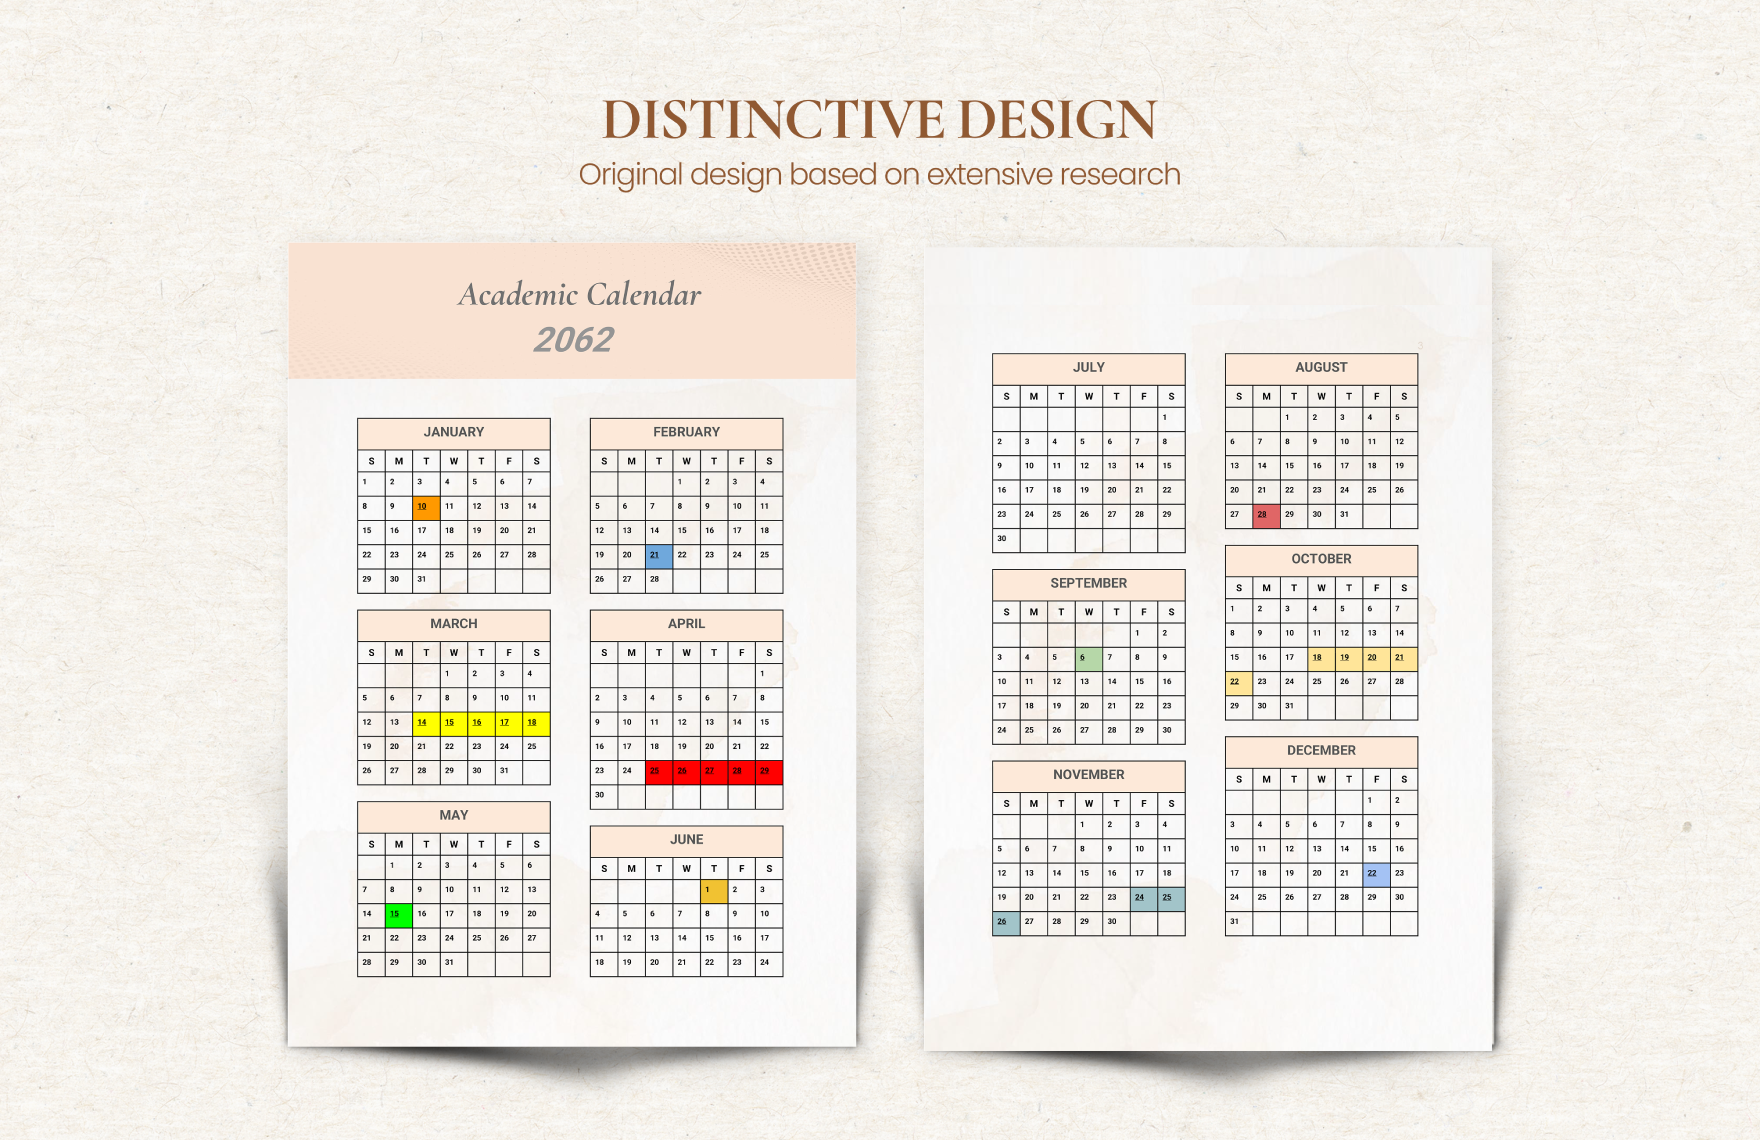 Academic Calendar Template